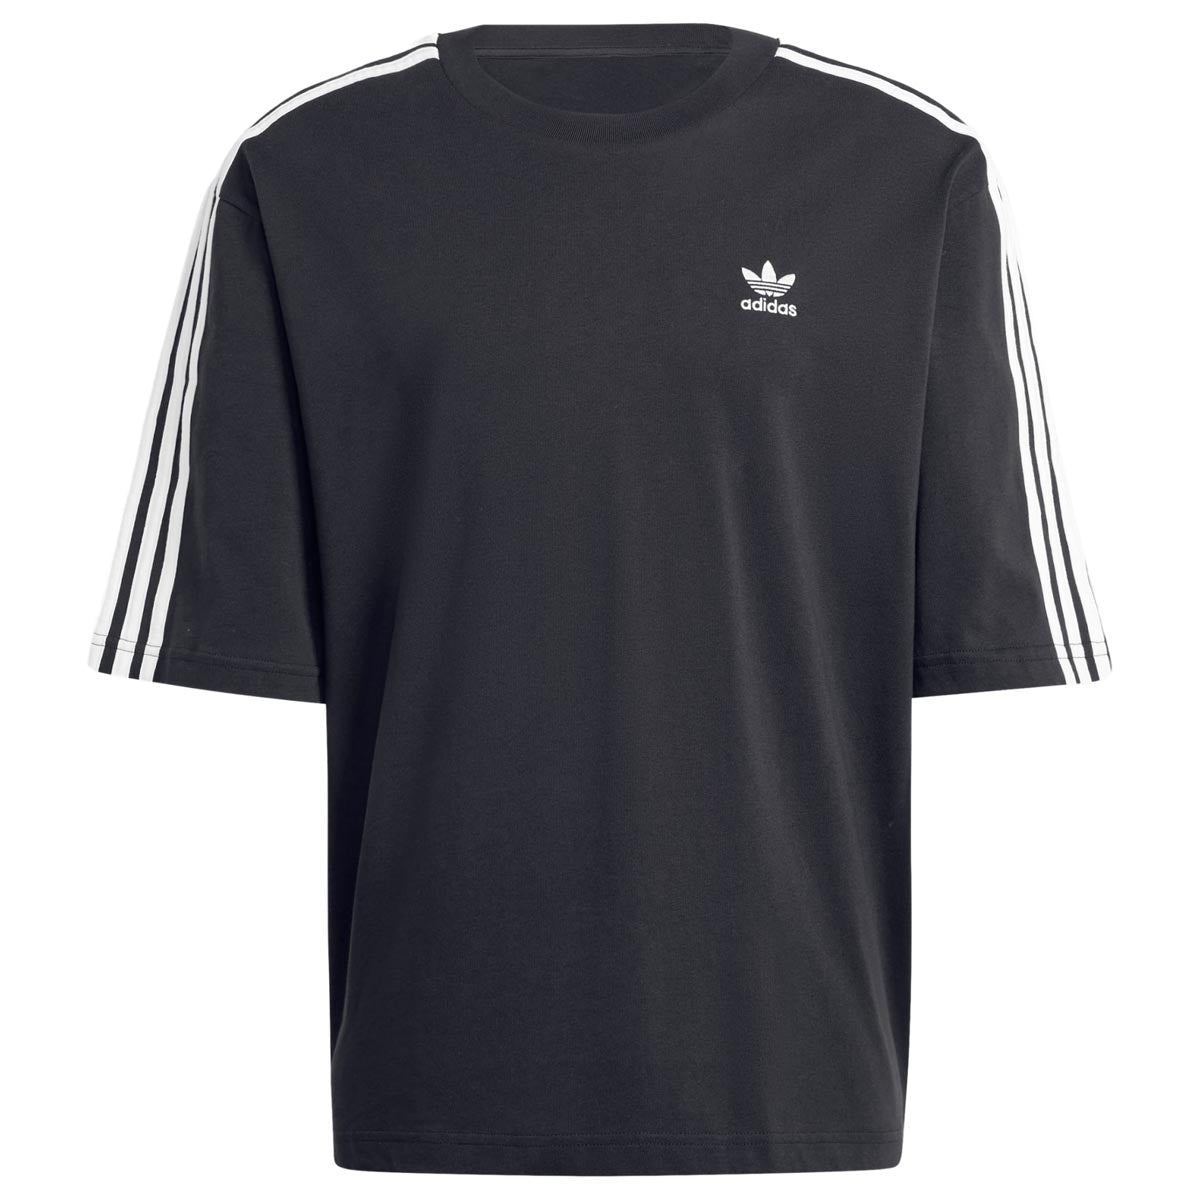 Adidas Originals Adicolor Oversized T-Shirt - Black image 5